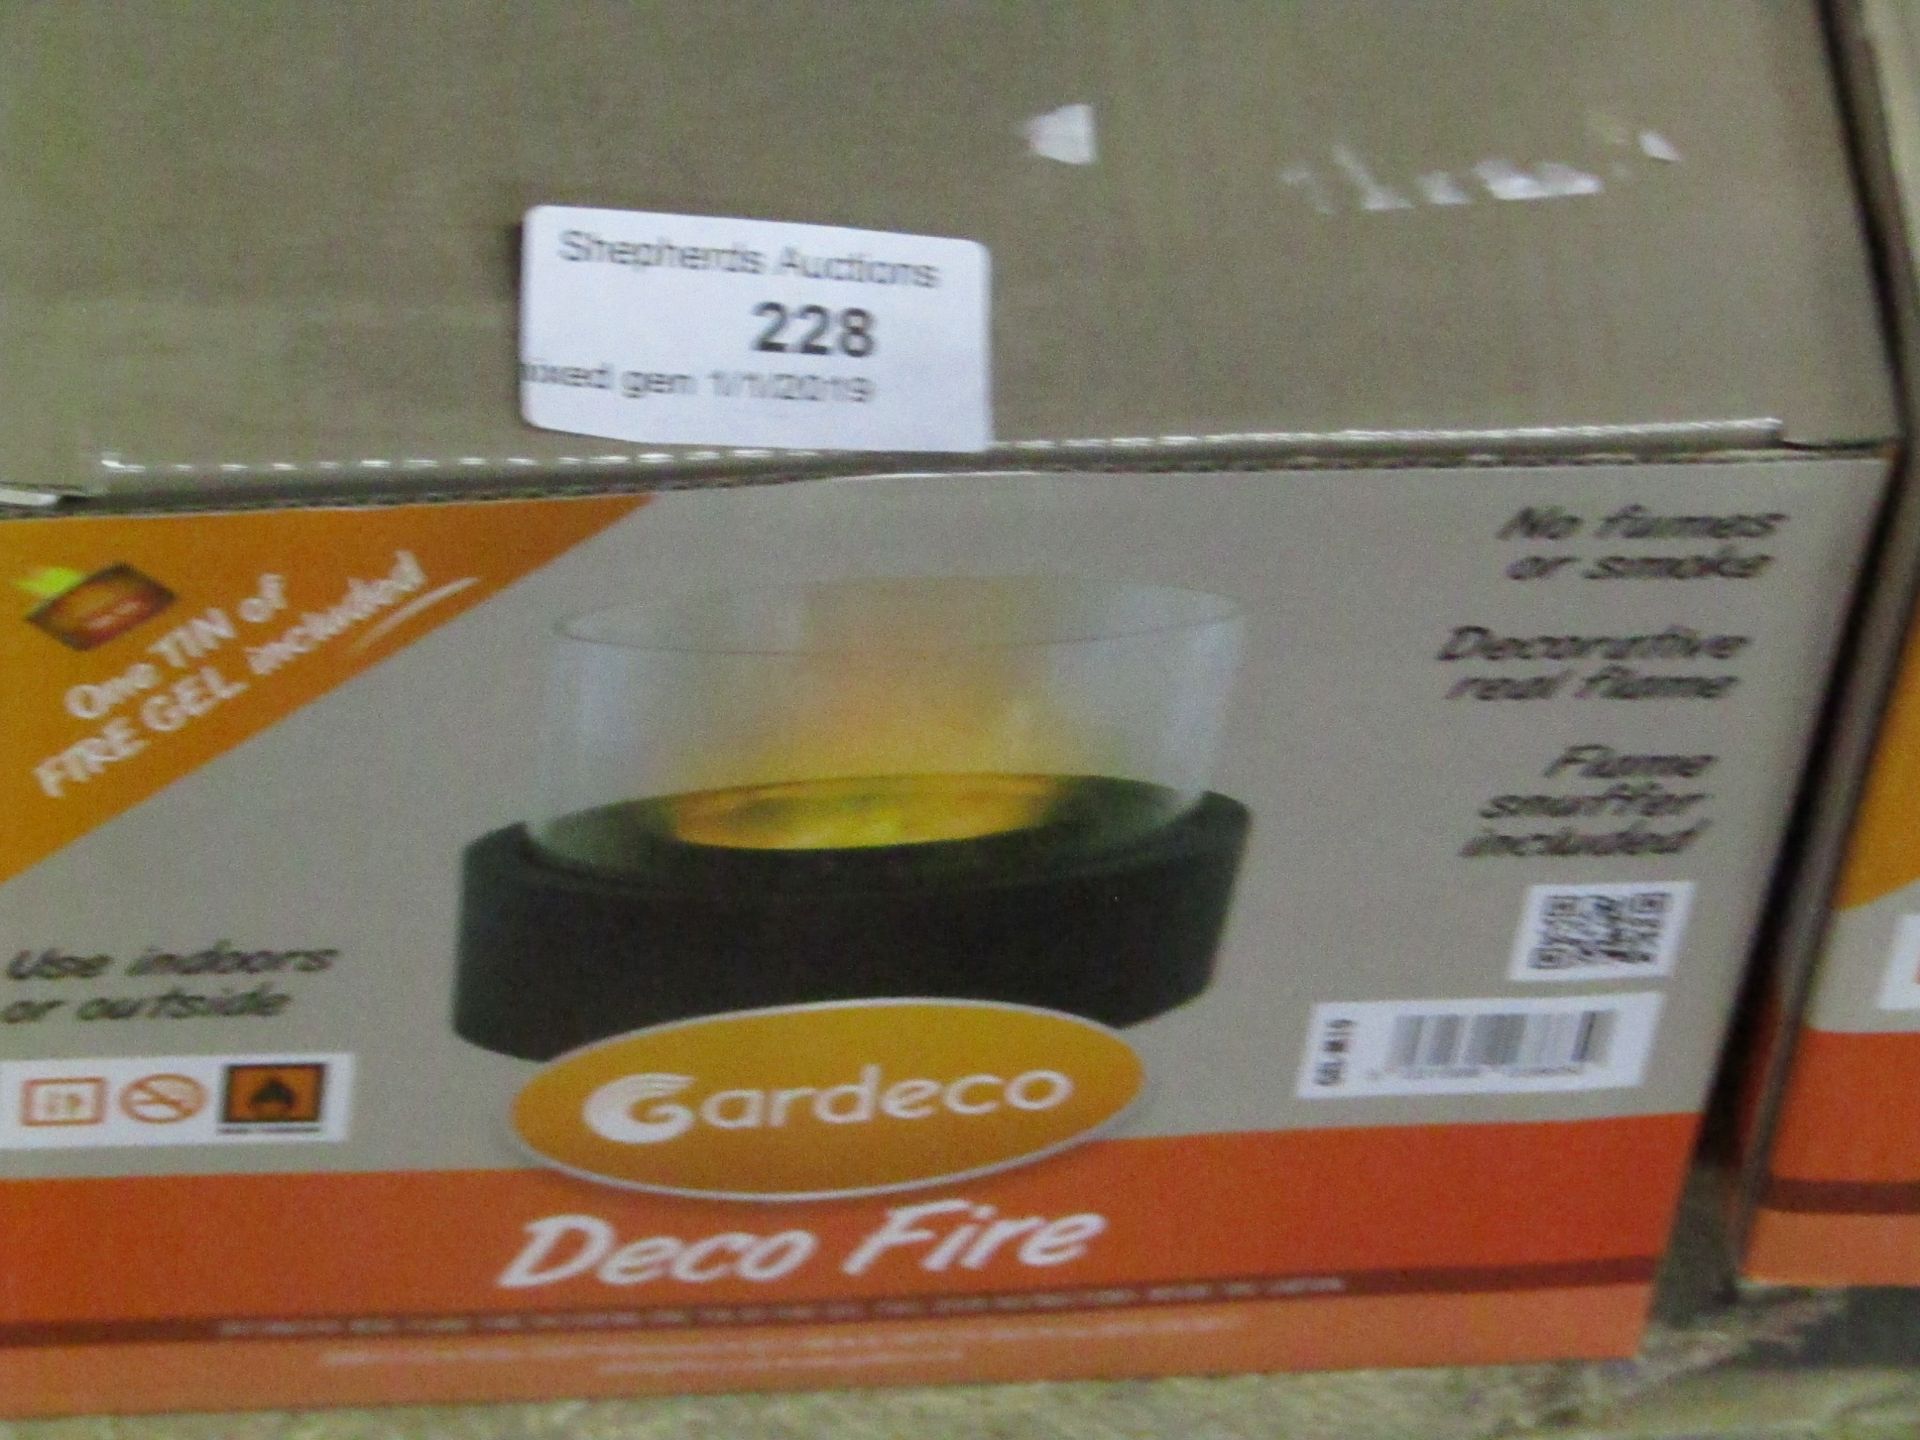 Gardeco deco fire gel burner. New & boxed.